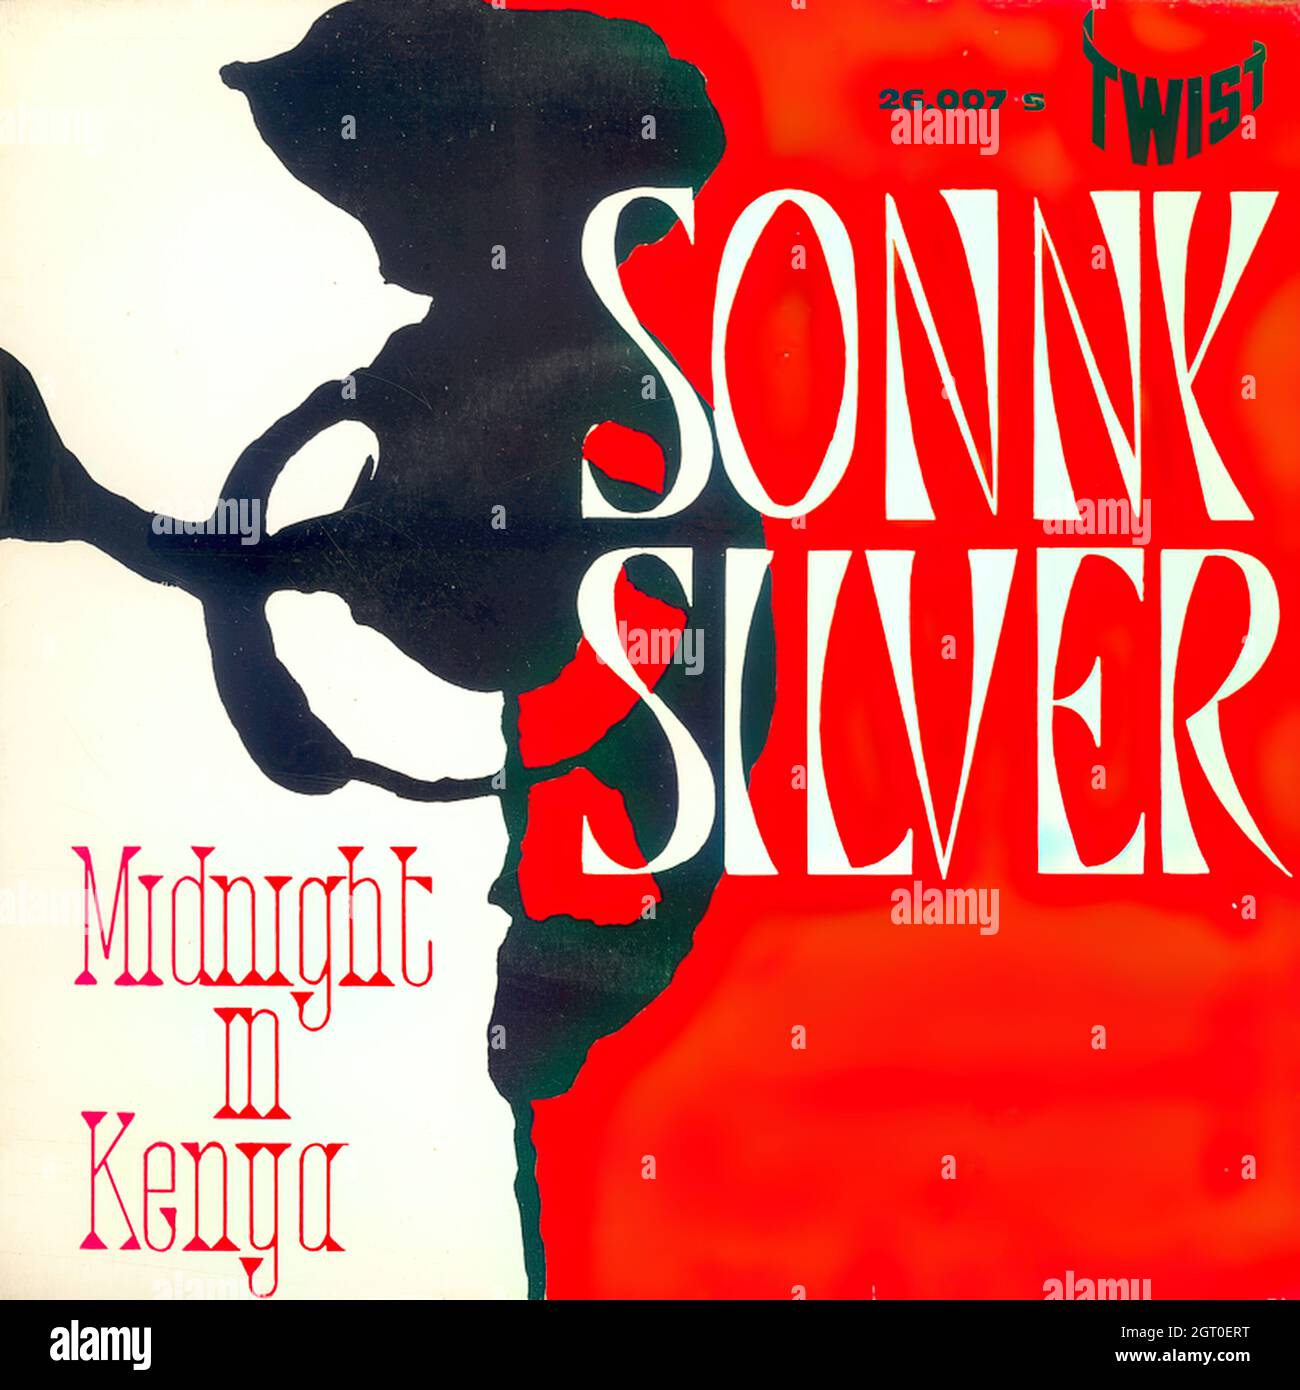 Sonny Silver - Midnight in Kenya EP - Vintage Vinyl Record Cover Stock Photo